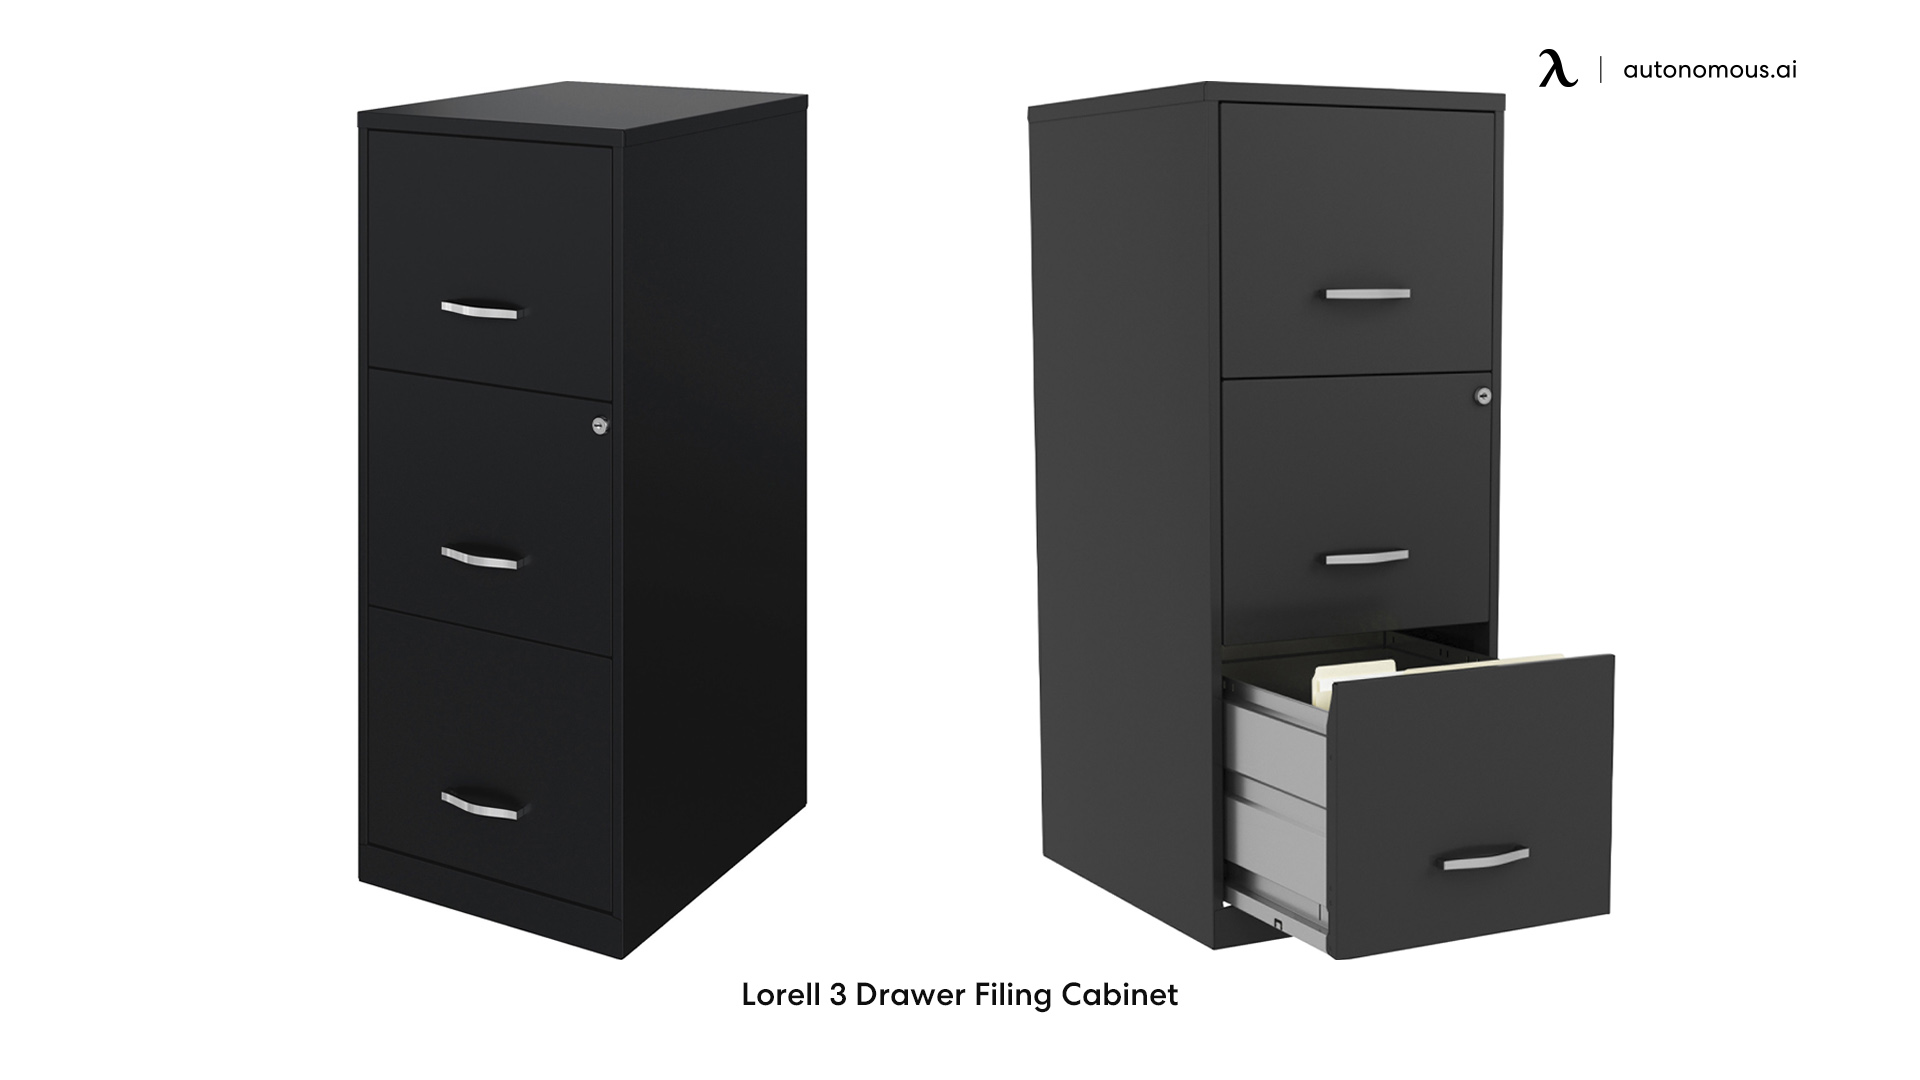 Lorell 3 Drawer Filing Cabinet